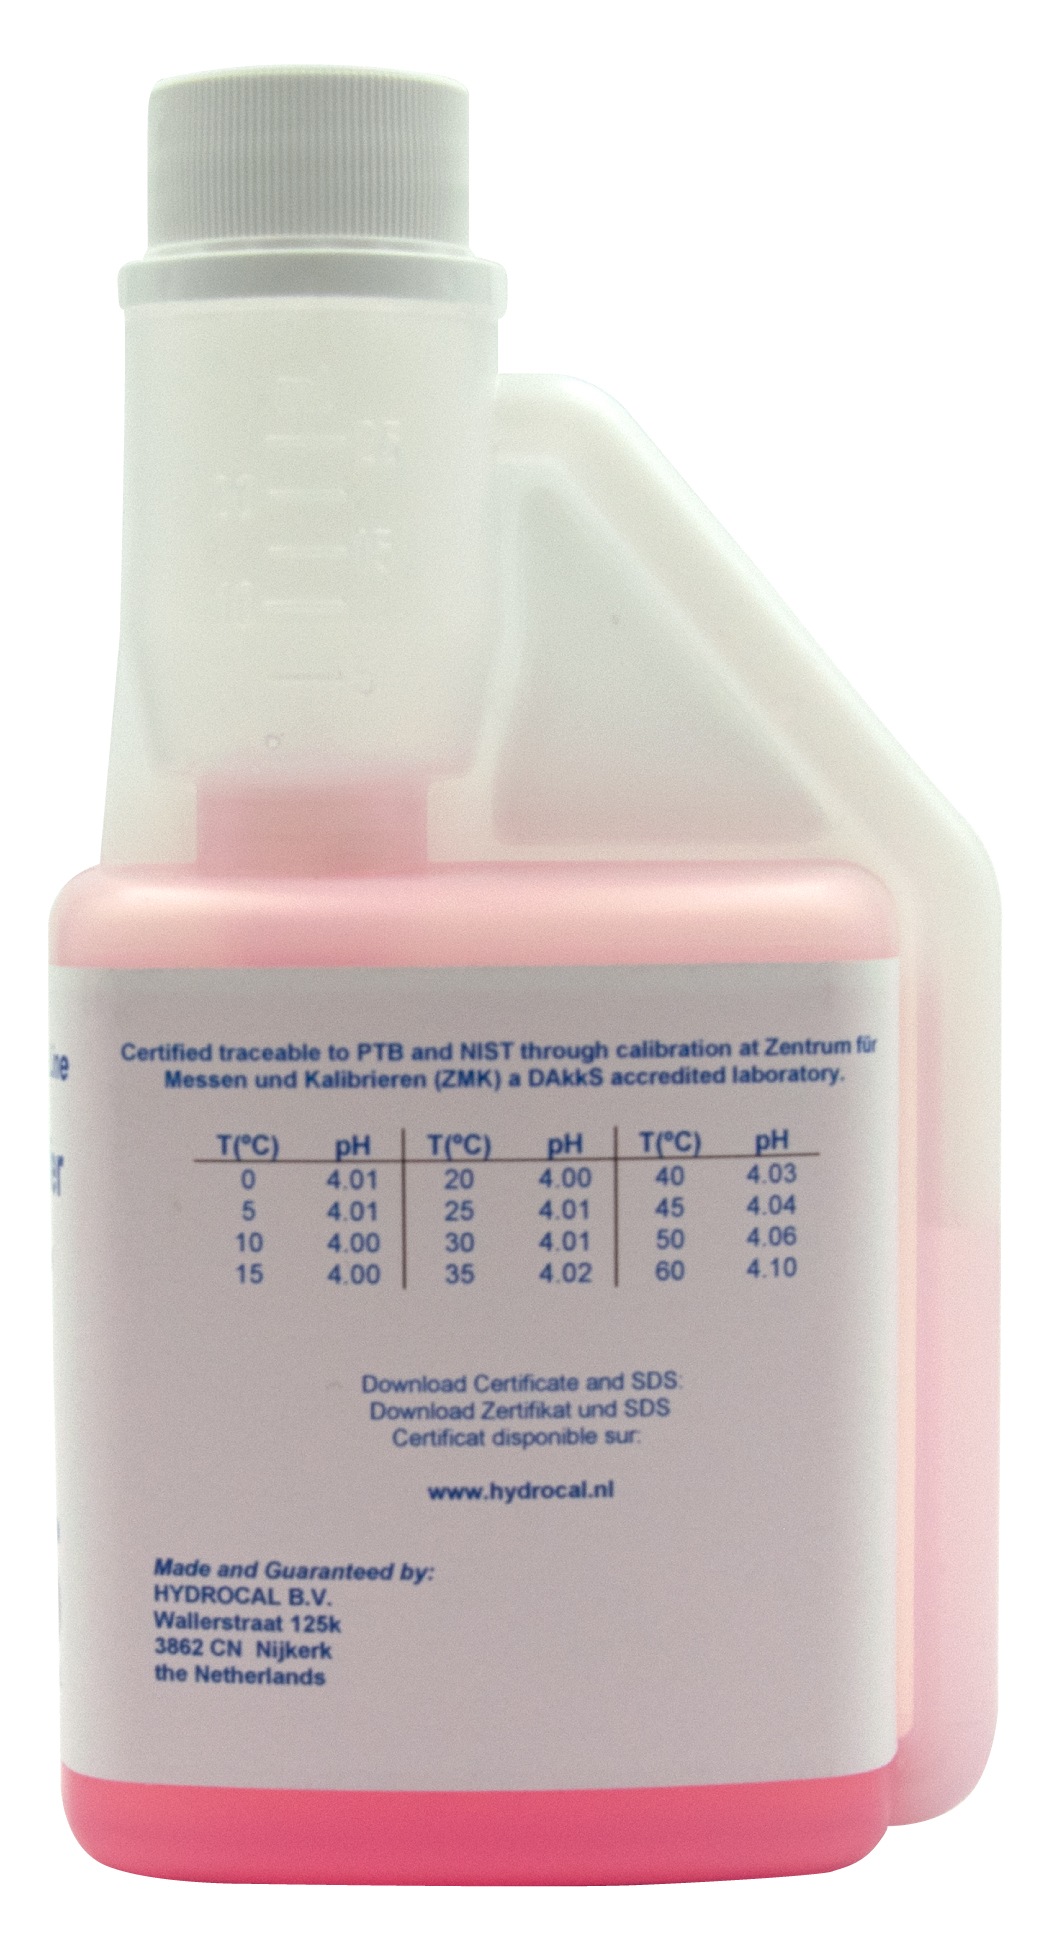 XS Professional pH 4.01 (±0.01pH @25°C) - 250ml pH buffer solution with DAkkS certificate